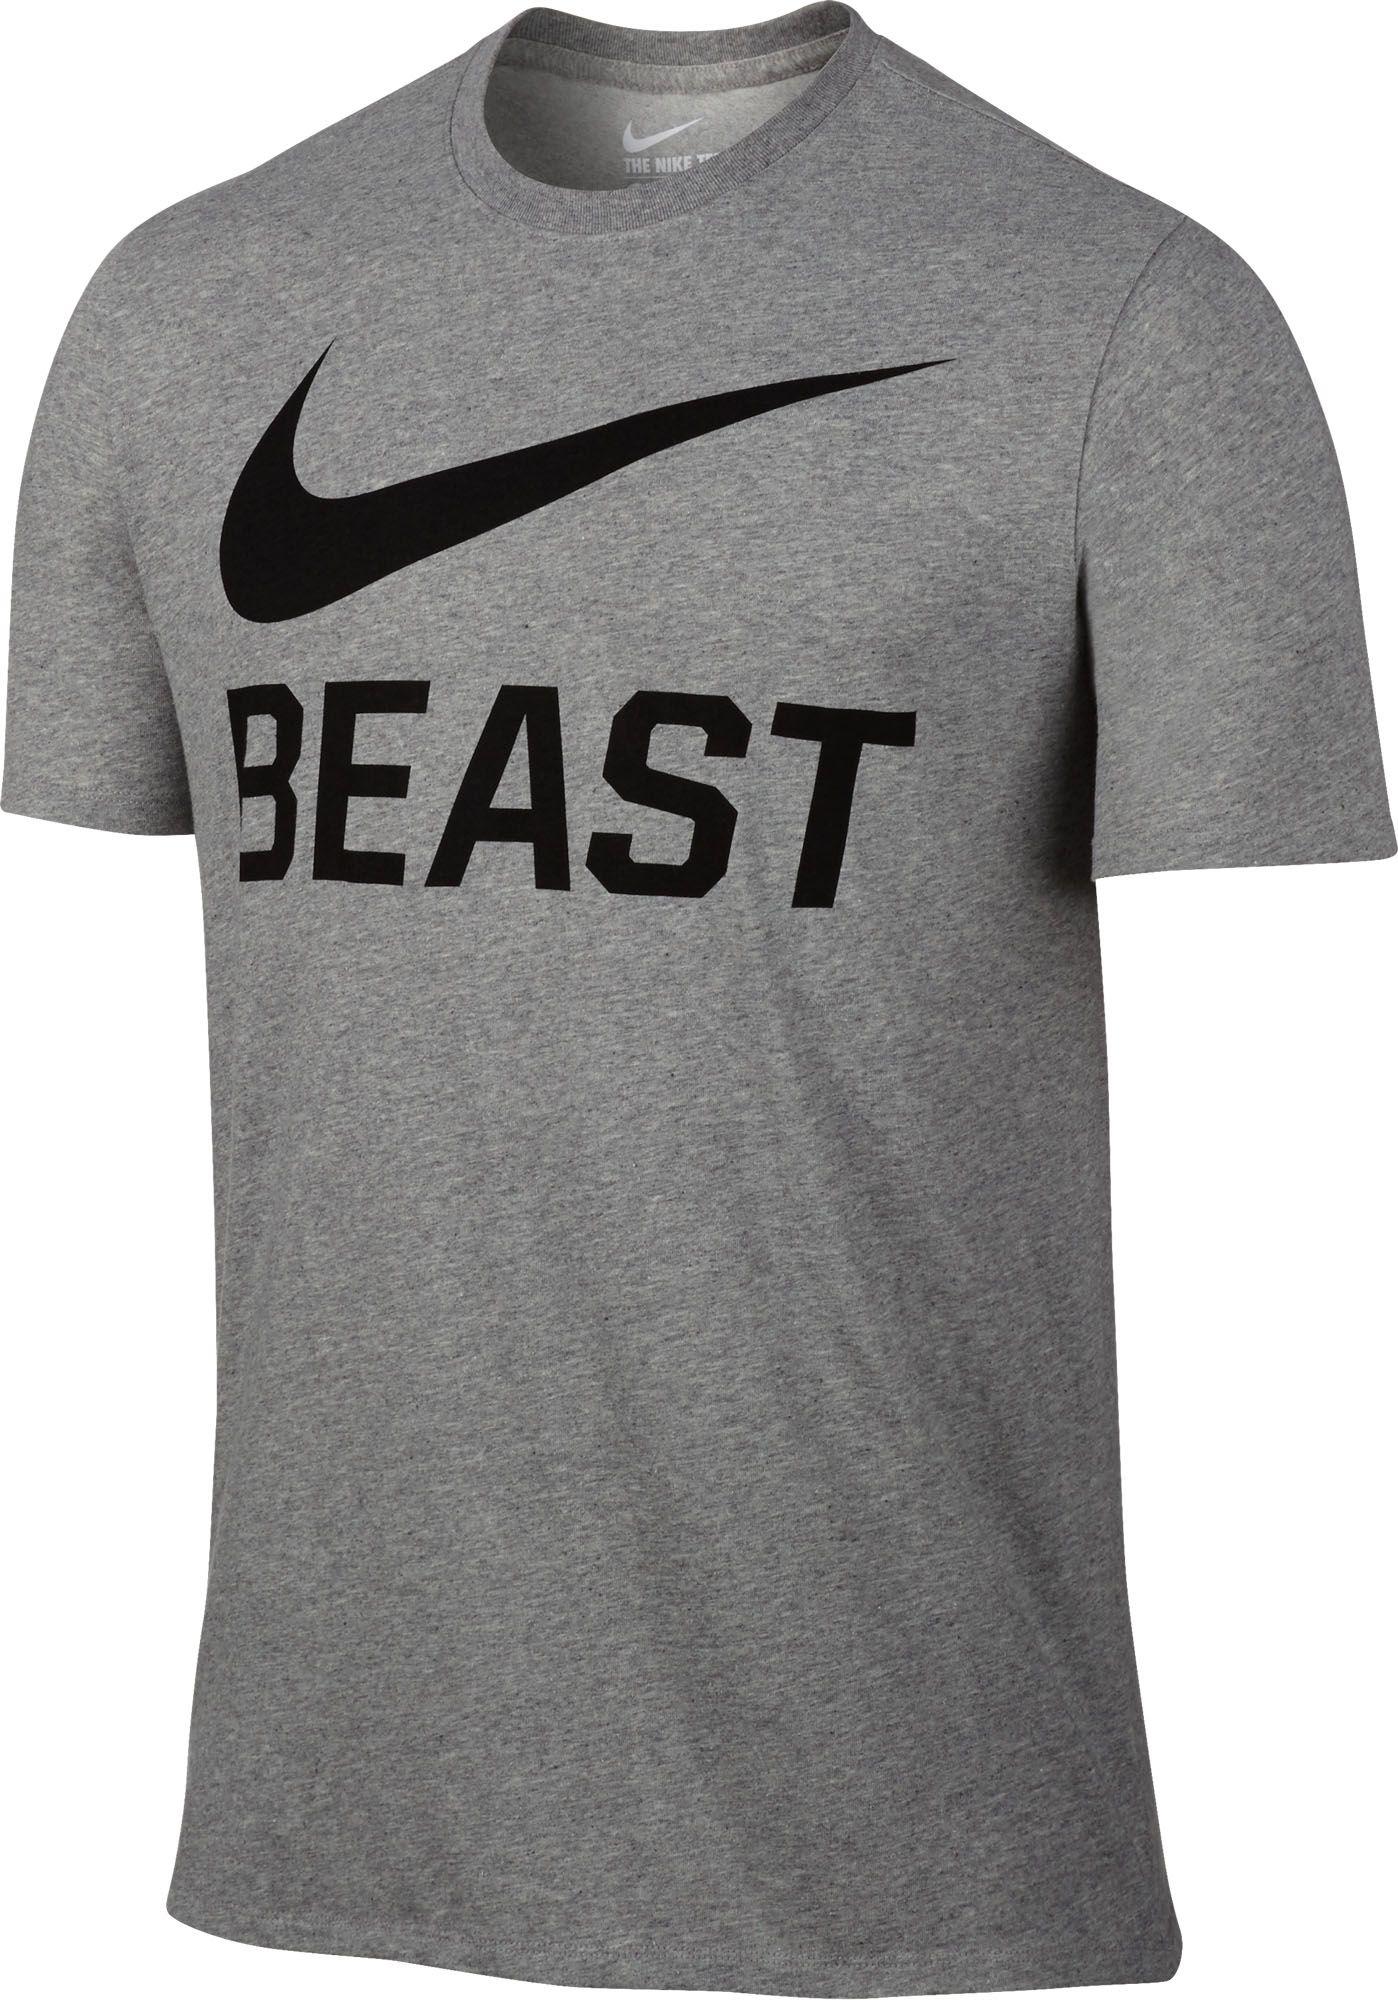 nike beast shirt